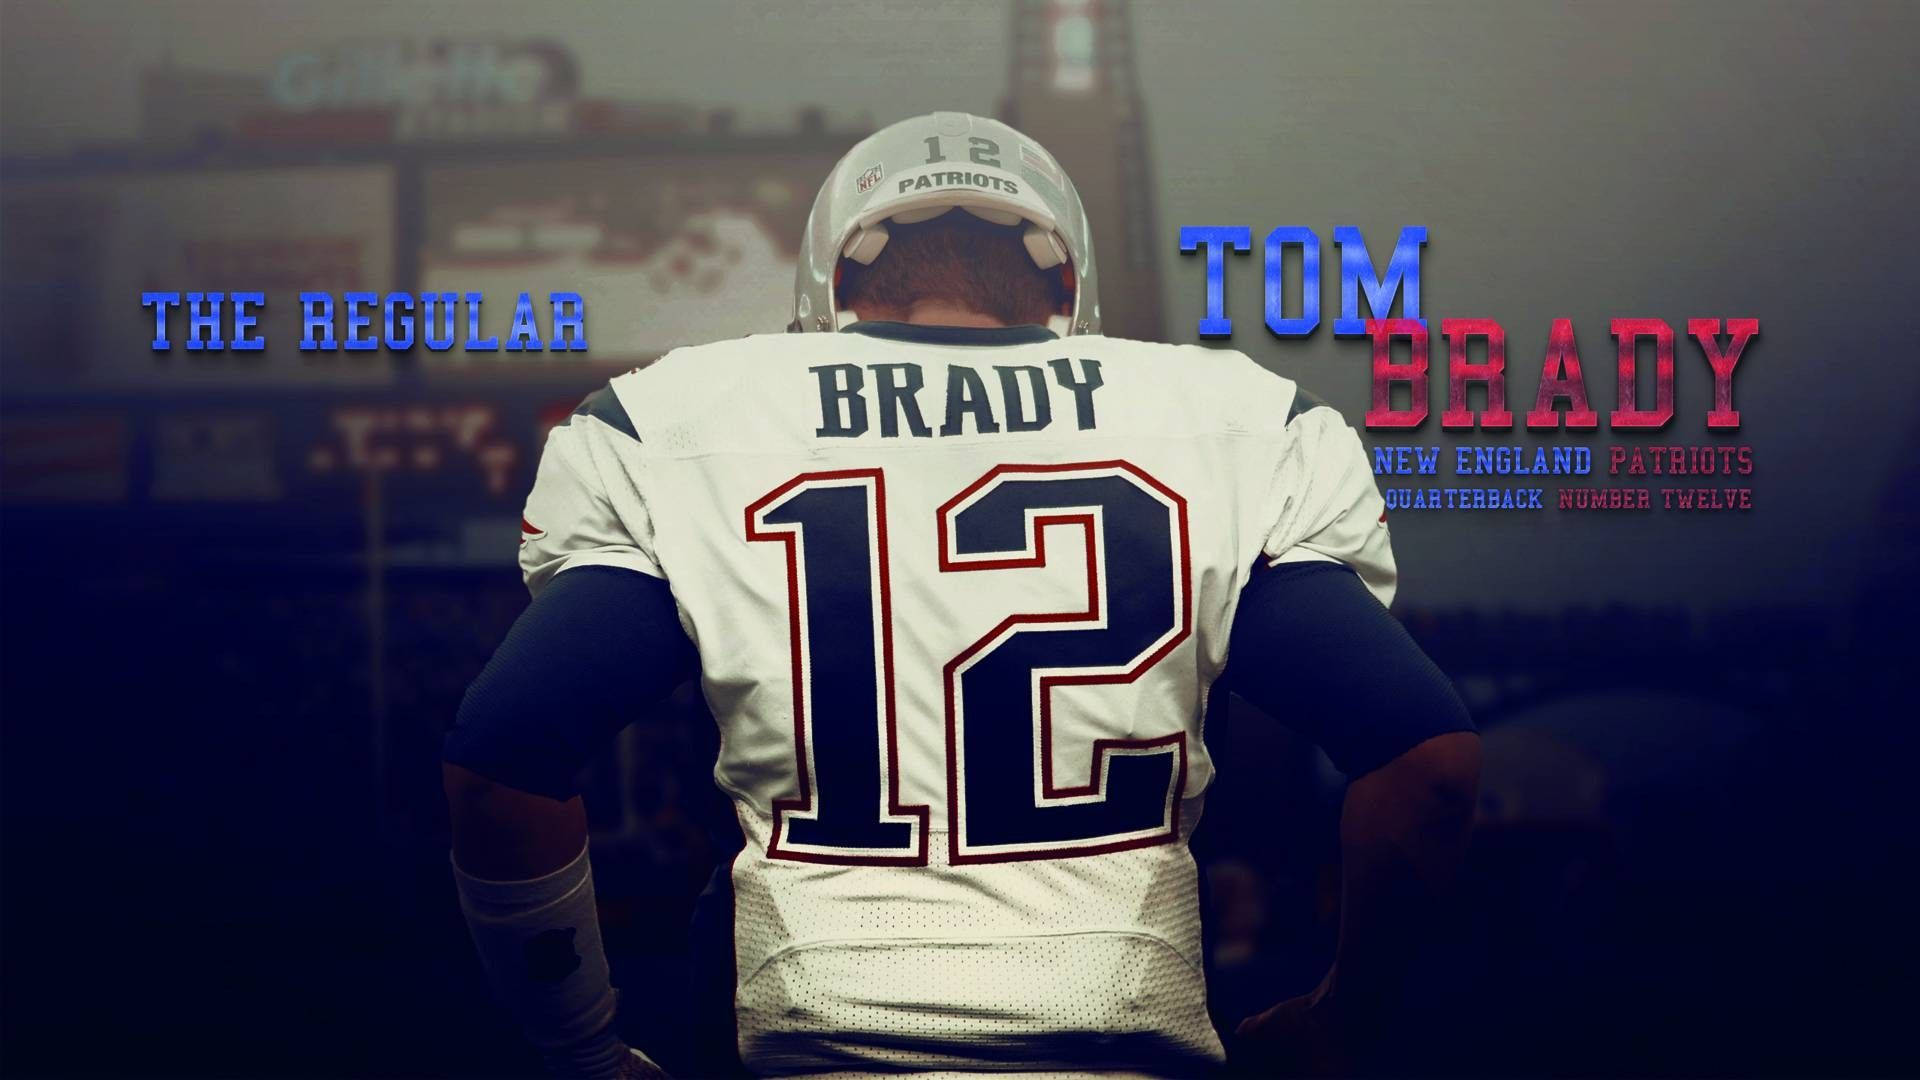 Tom Brady The Regular Background